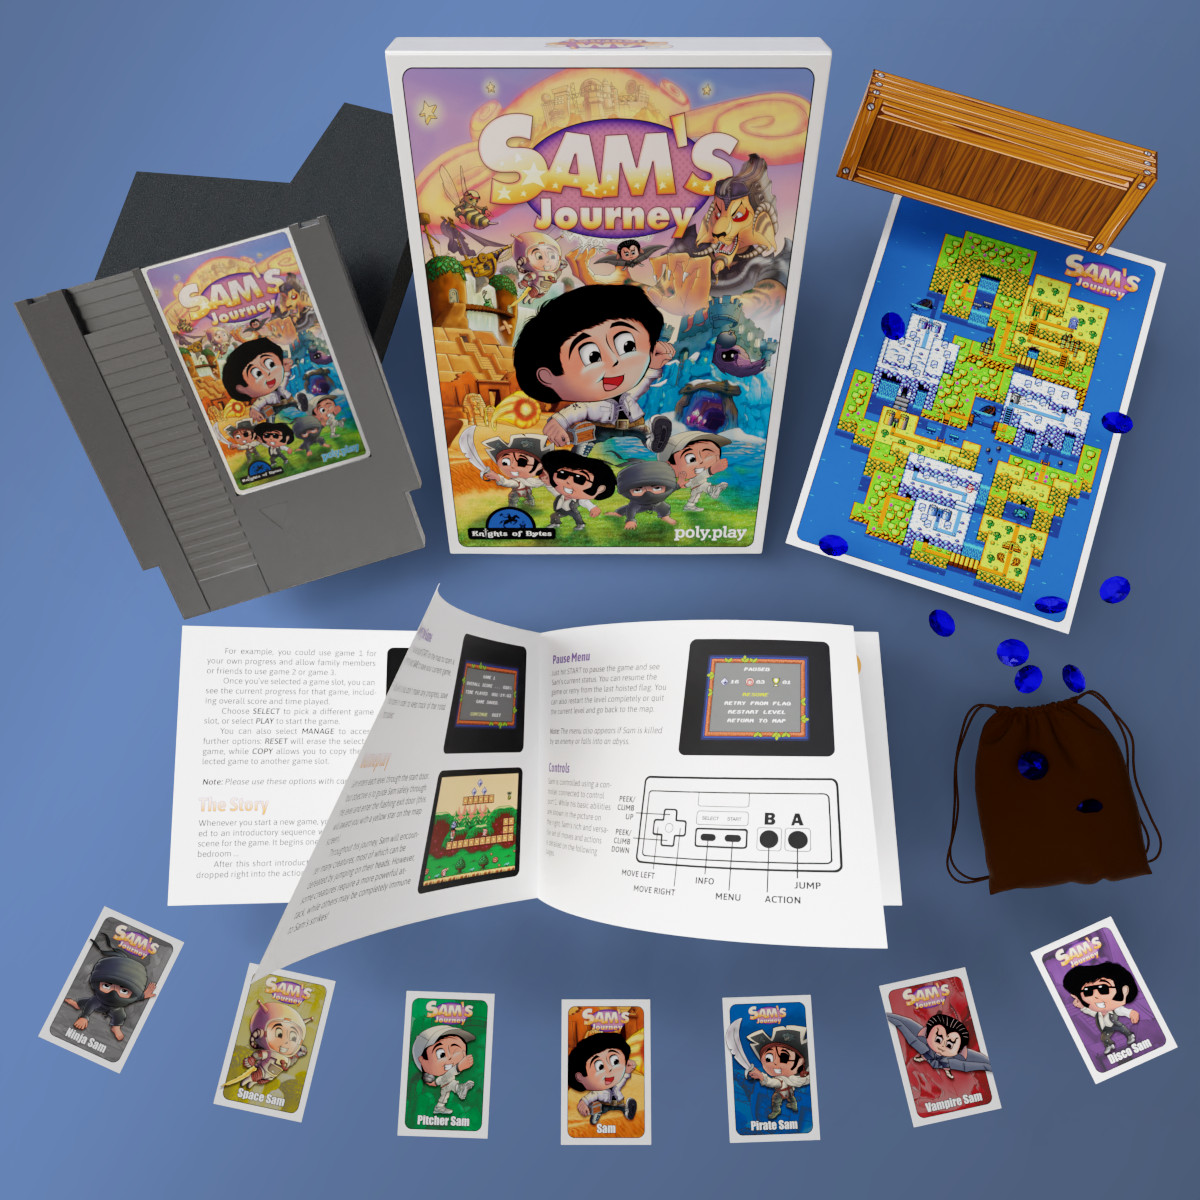 Sam's Journey NES Standard Edition Box Contents